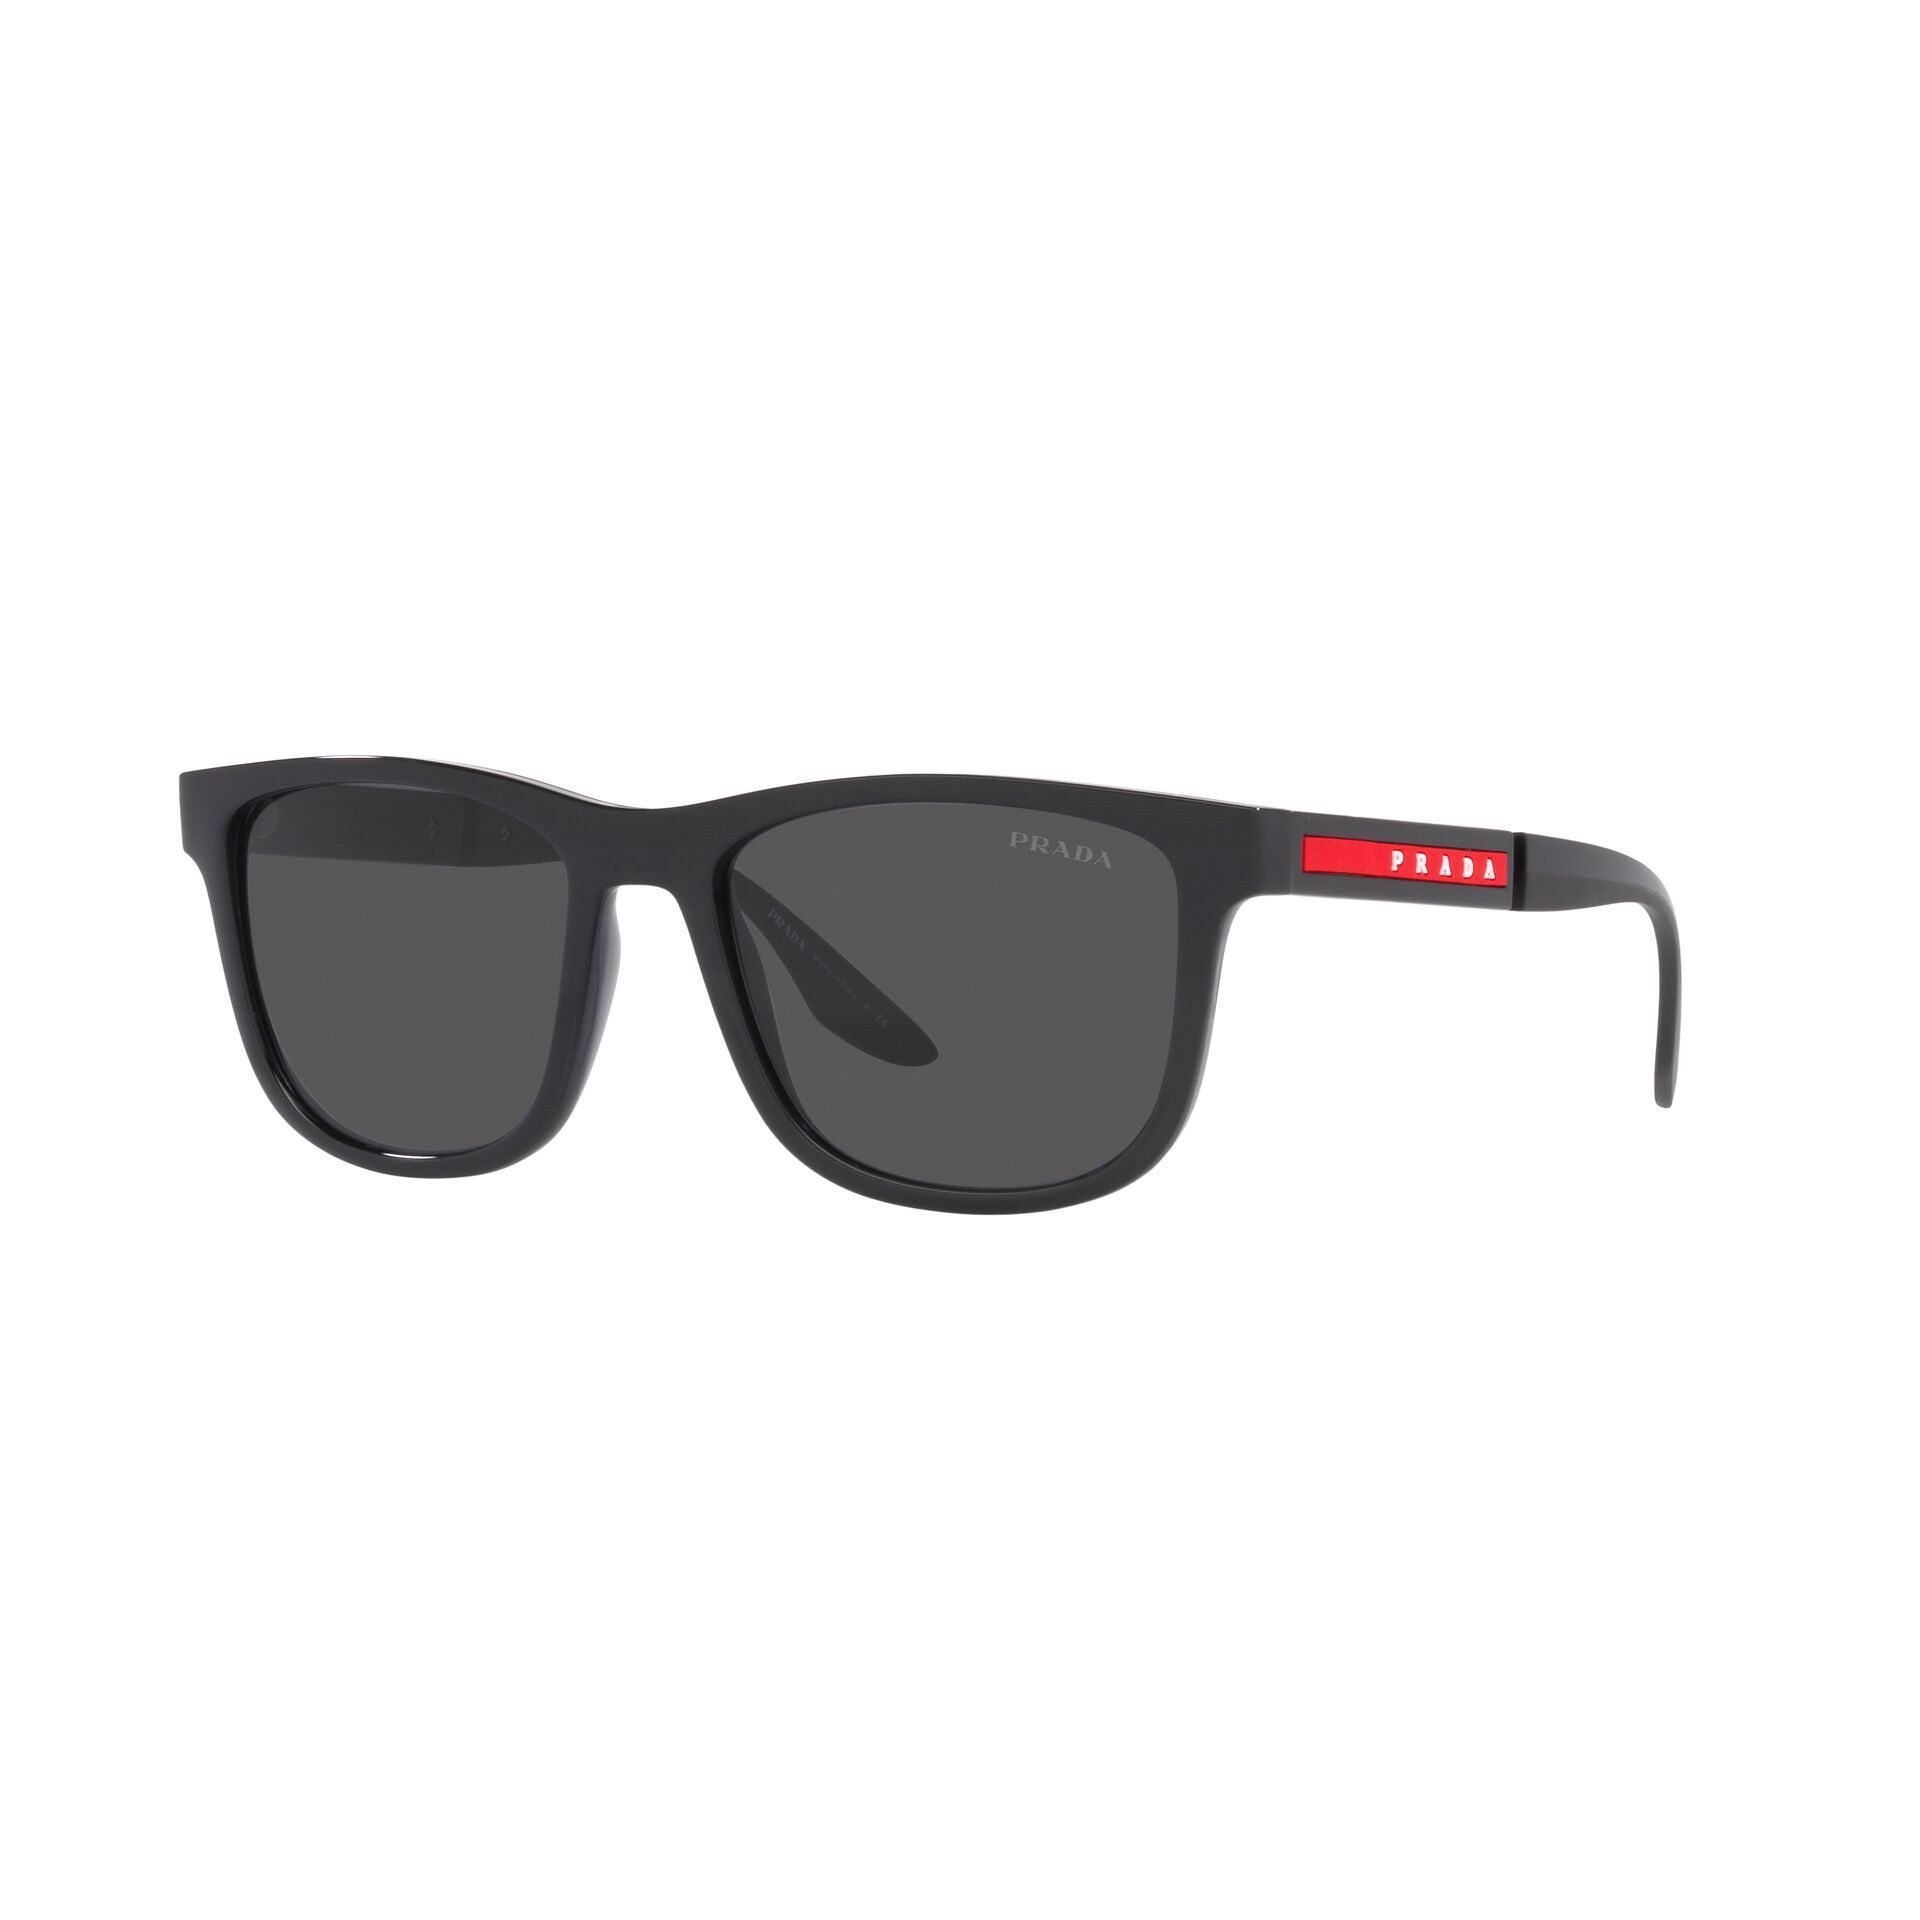 PS 04XS Square Sunglasses 1AB5S0 - size 54